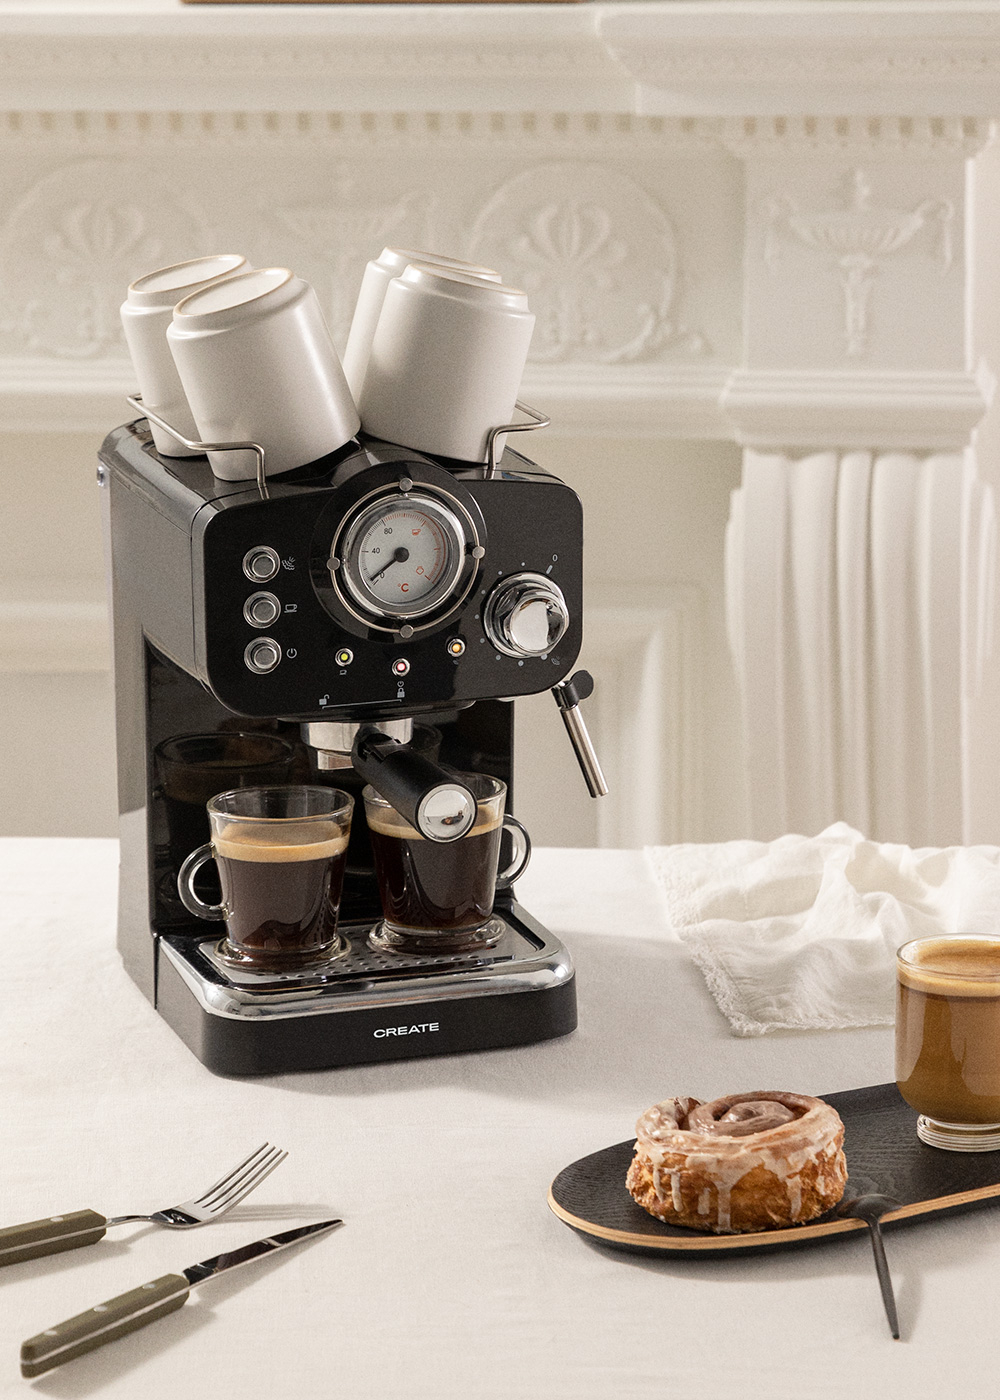 THERA RETRO GLOSS - Espresso coffee machine with gloss finish